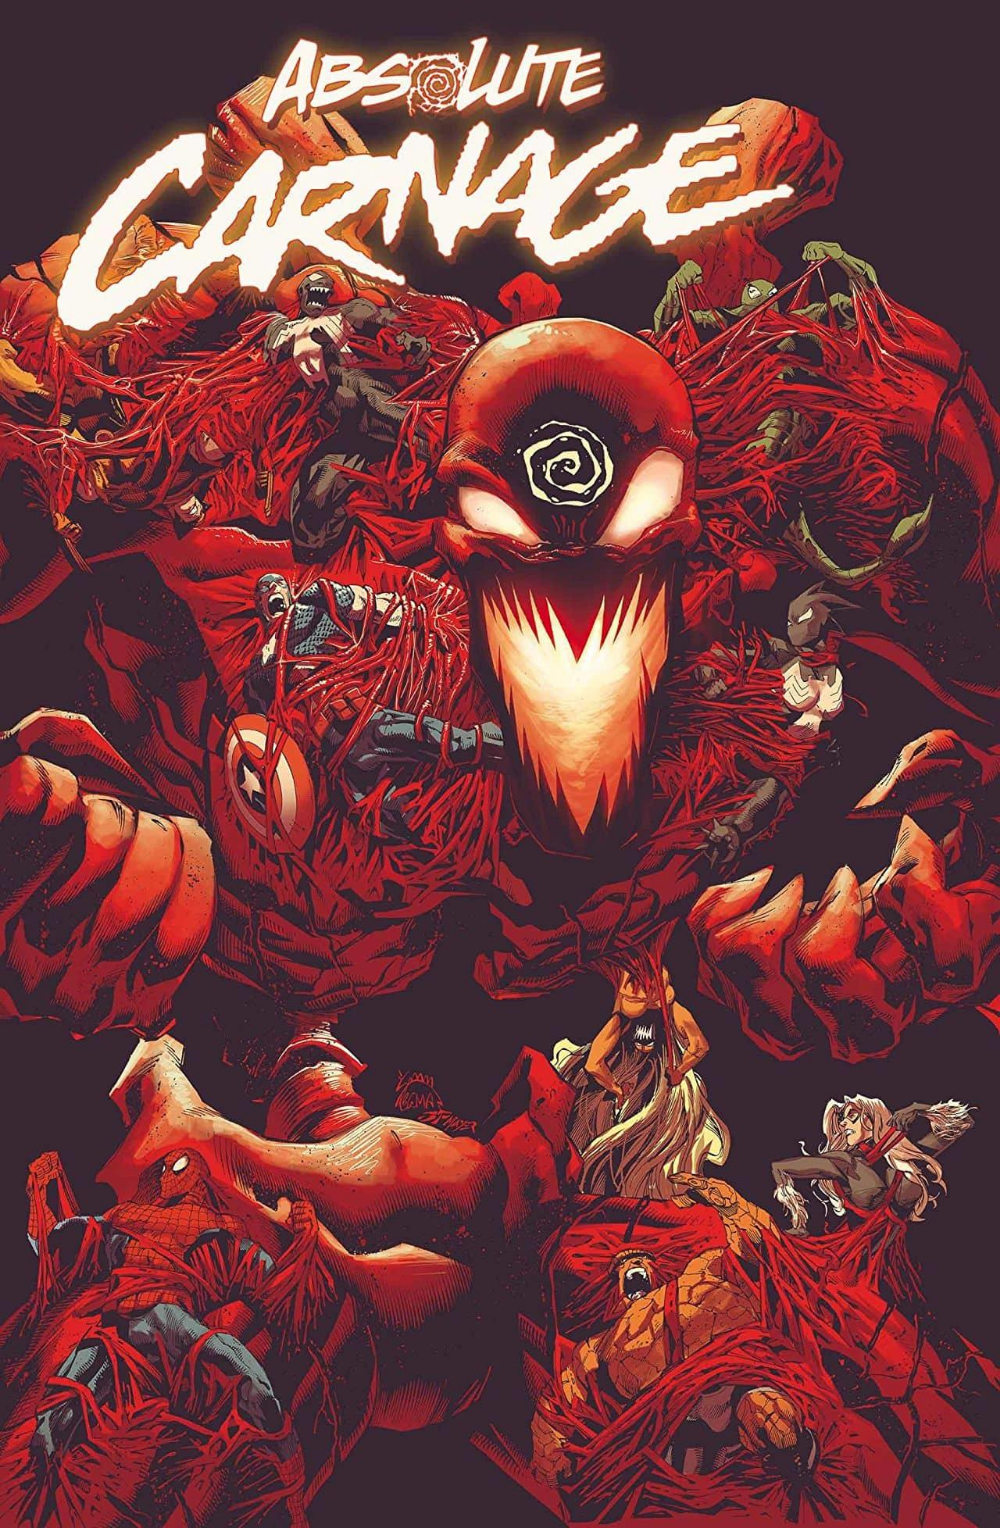 Massive 'Absolute Carnage' Event Extended. Carnage marvel, Carnage, Marvel comics